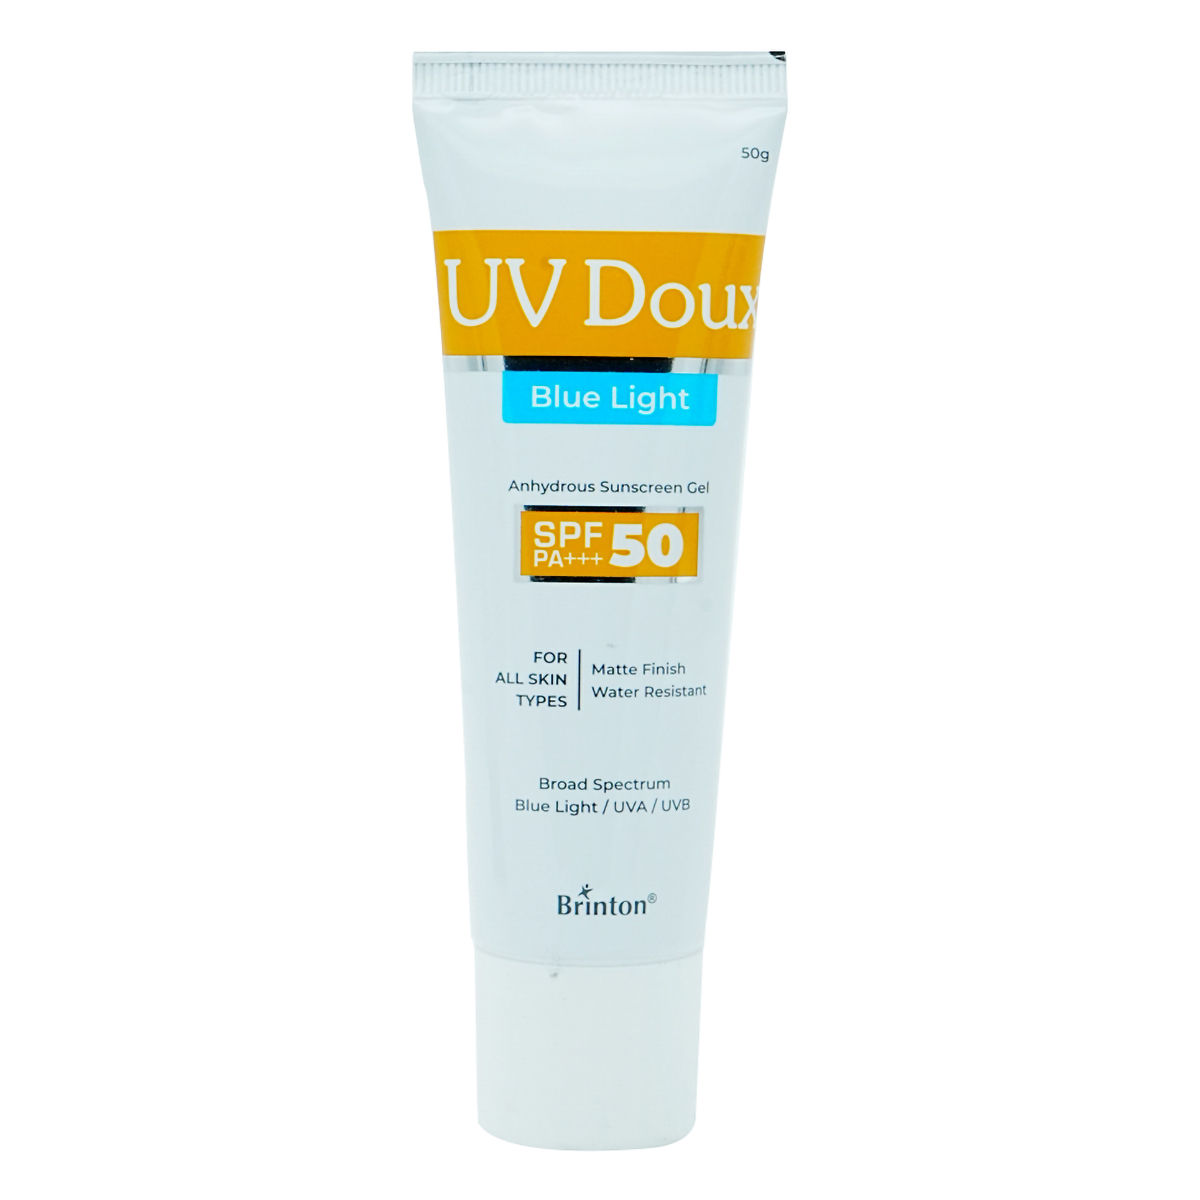 Buy Uv Doux SPF 50+ Blue Light Sunscreen Gel 50 gm Online